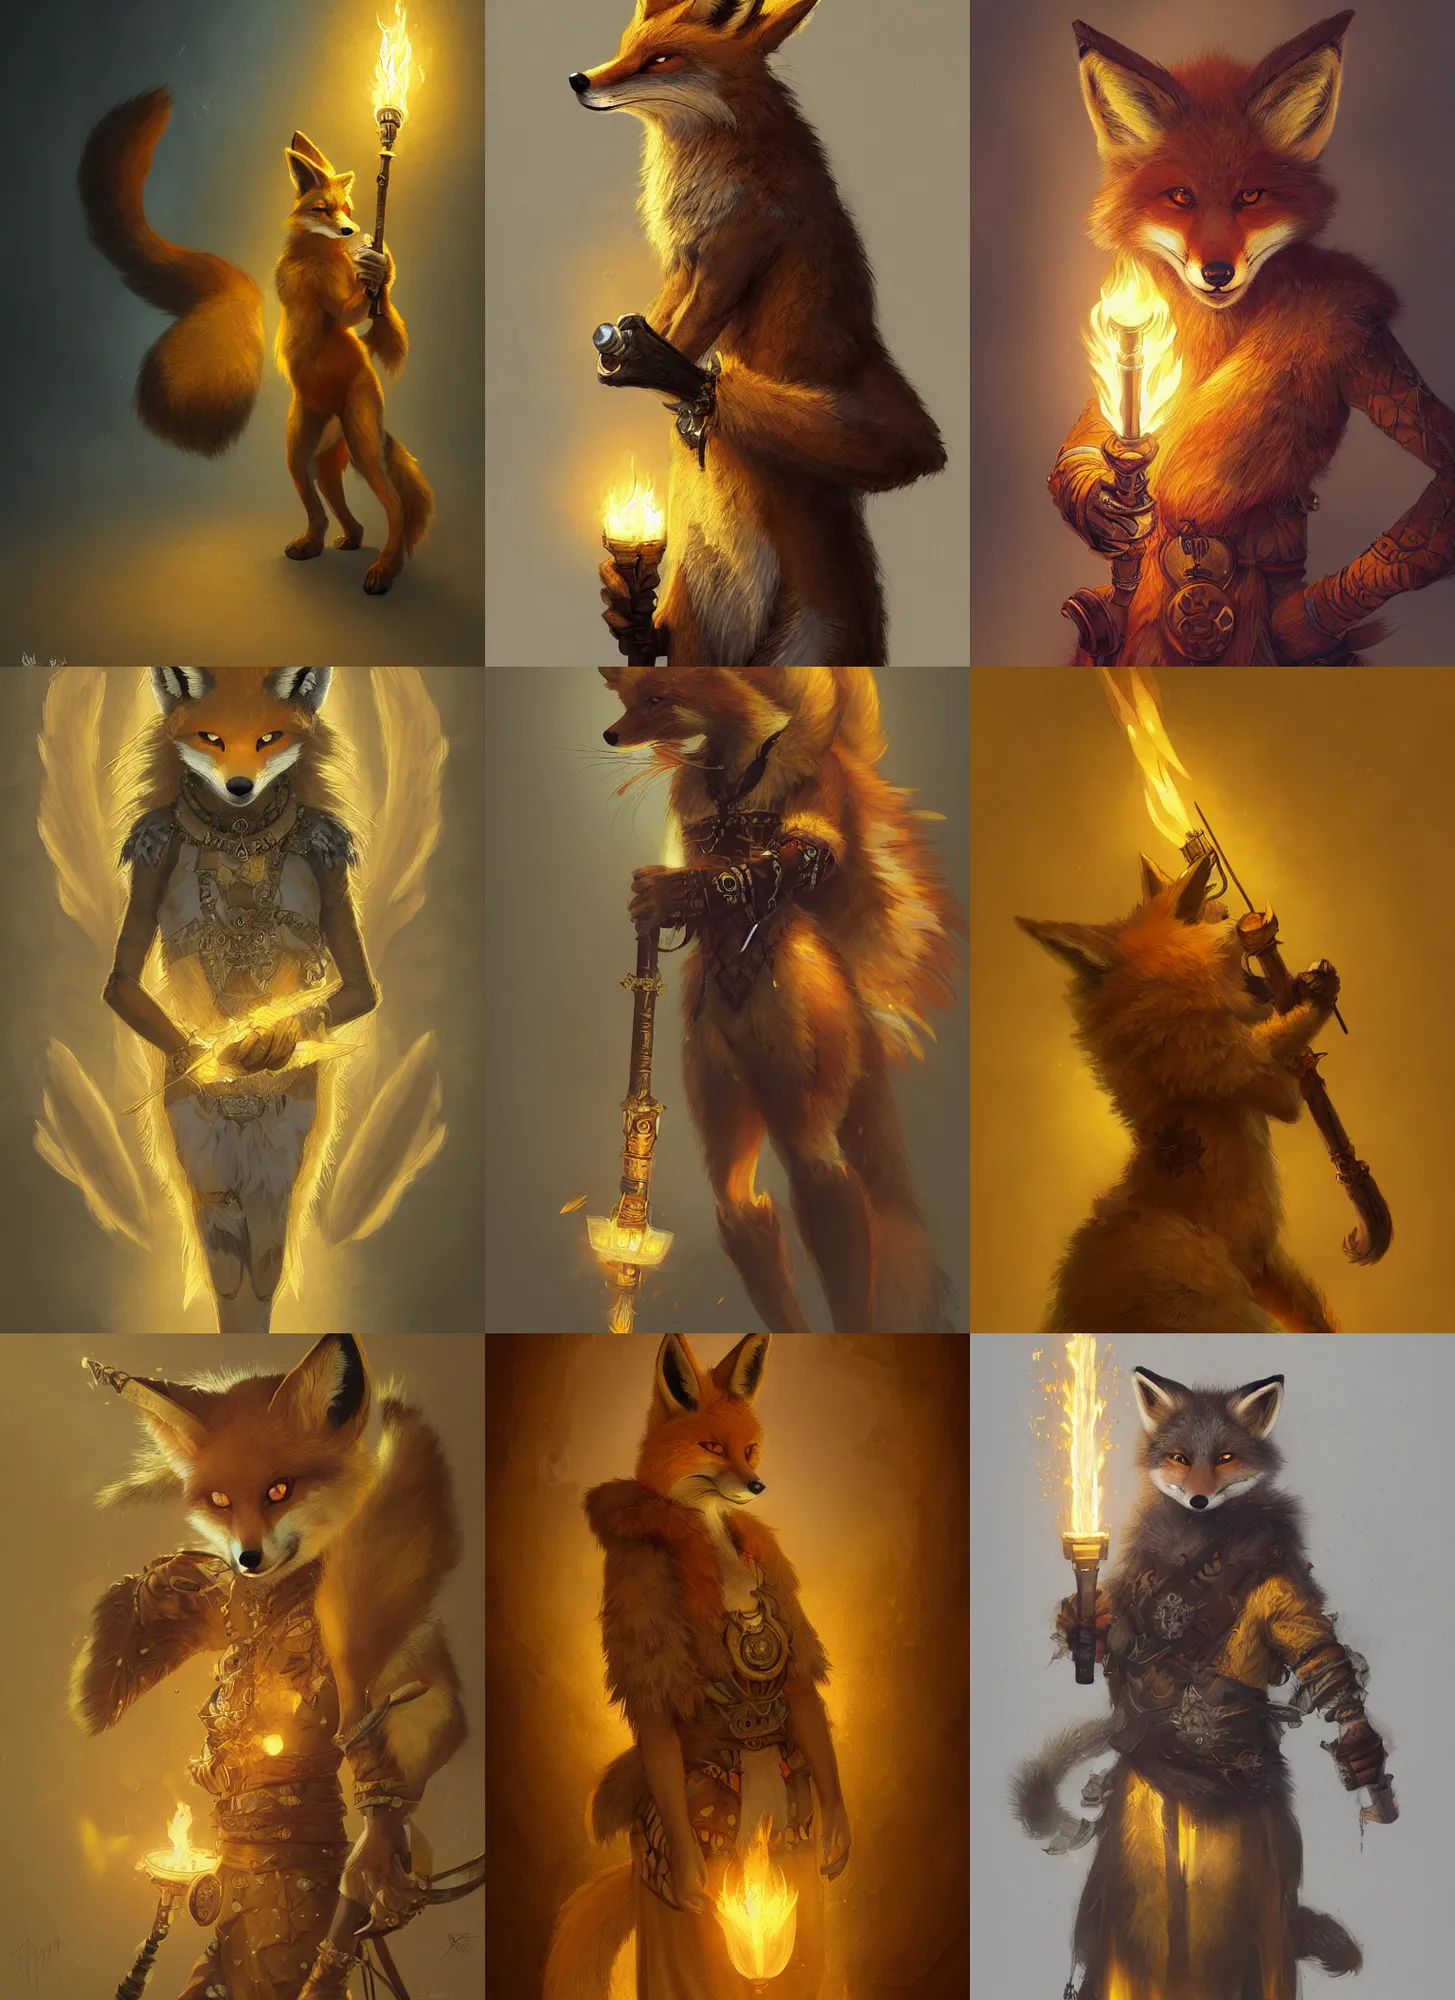 Prompt: yellow anthro fox holding a torch, shaman, kitsune, fursona, furry, intricate, highly detailed, digital painting, artstation, concept art, sharp focus, illustration, aleksi briclot, rutkowski, mucha